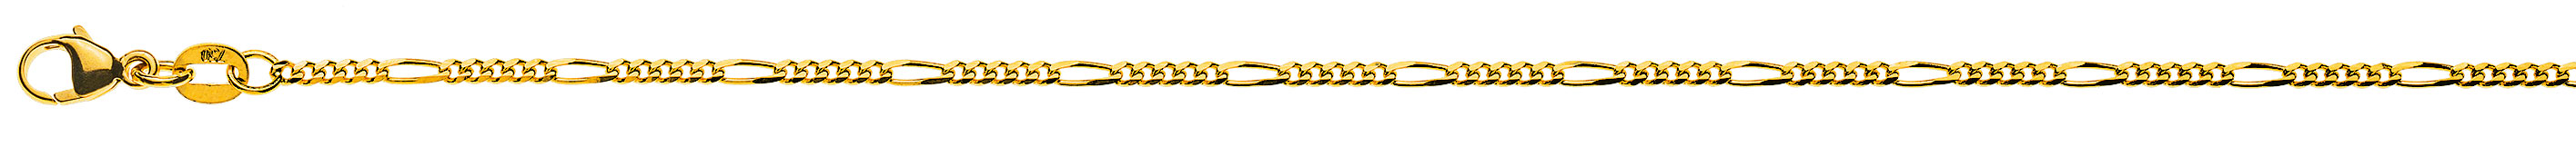 AURONOS Prestige Necklace yellow gold 18K Figaro chain 5+1 links 60cm 1.8mm